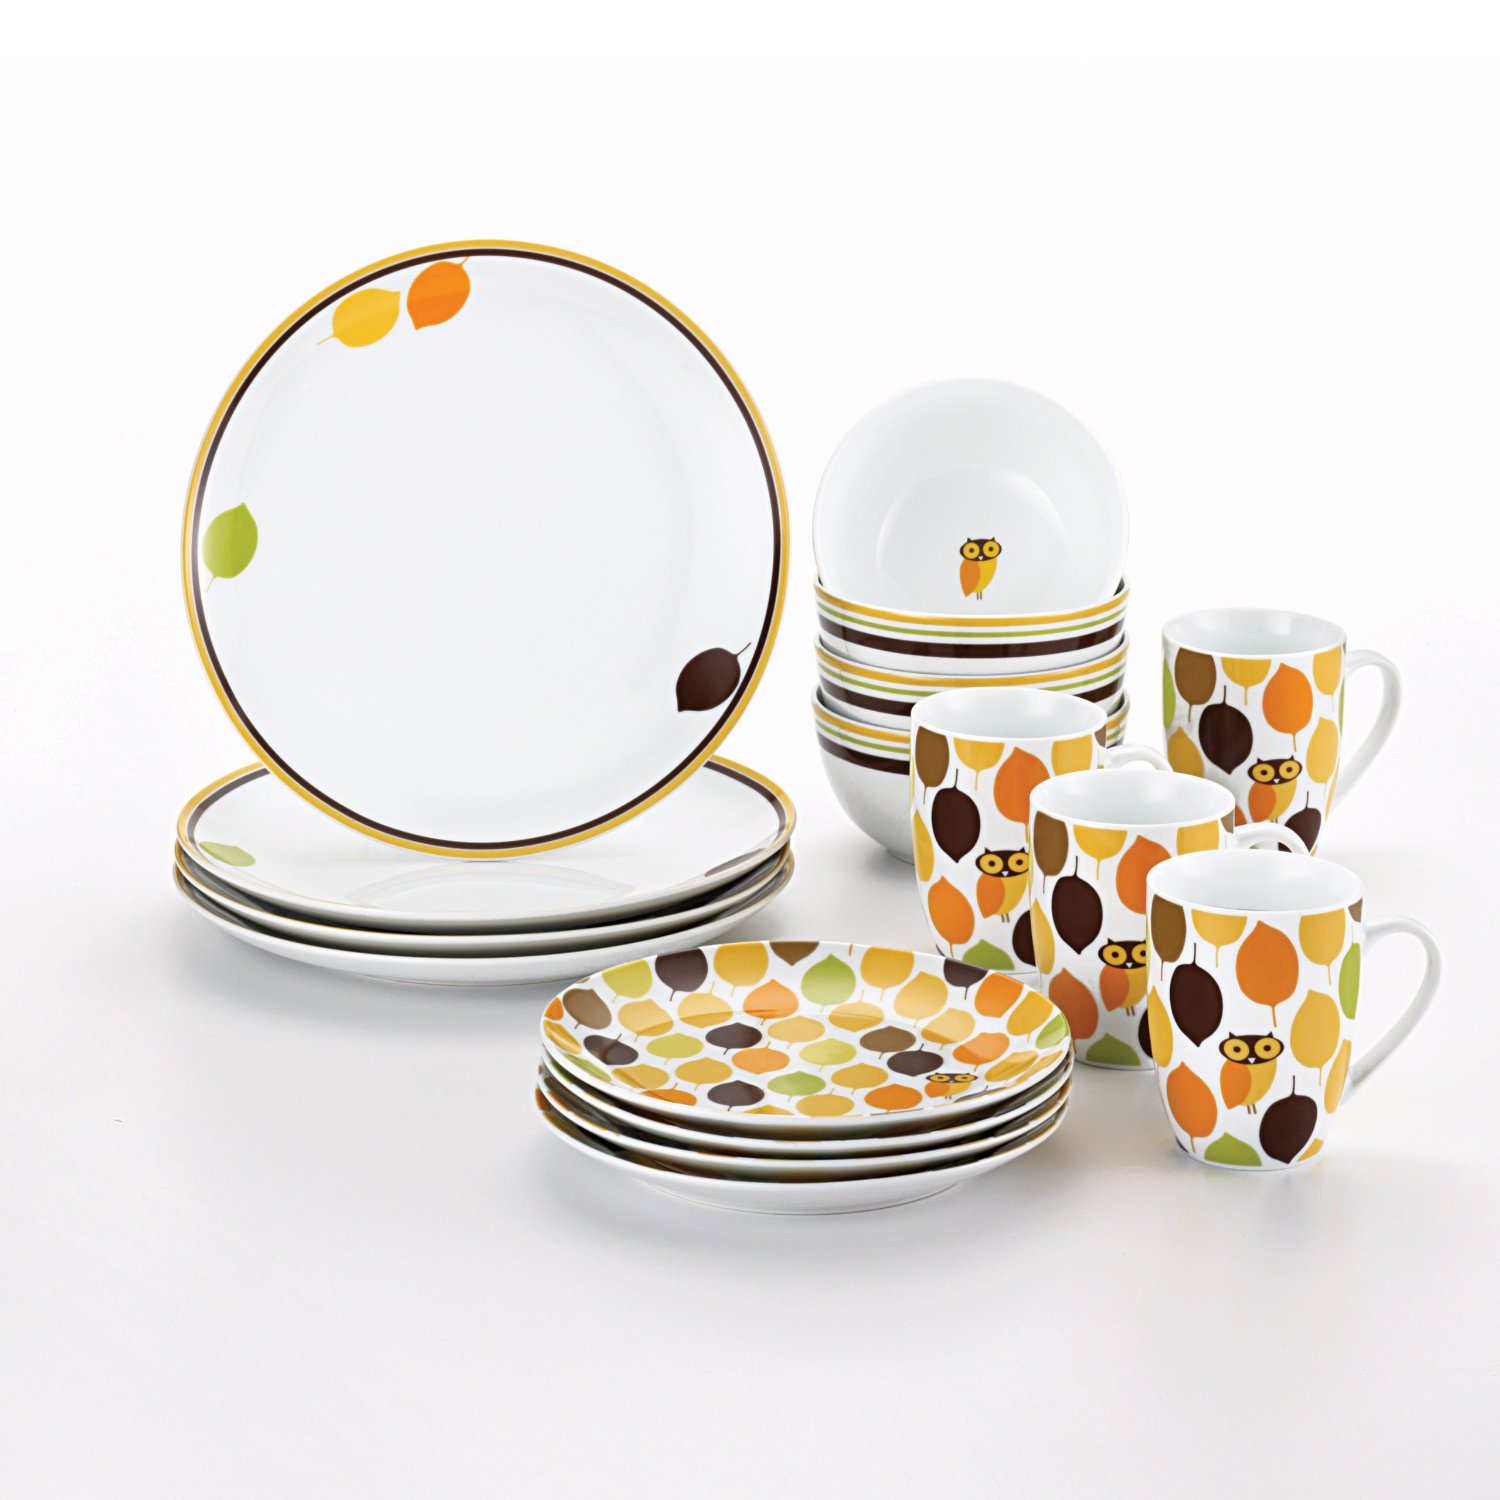 Rachael Ray Dinnerware Little Hoot 16-Piece Dinnerware Set – Just $40.06!